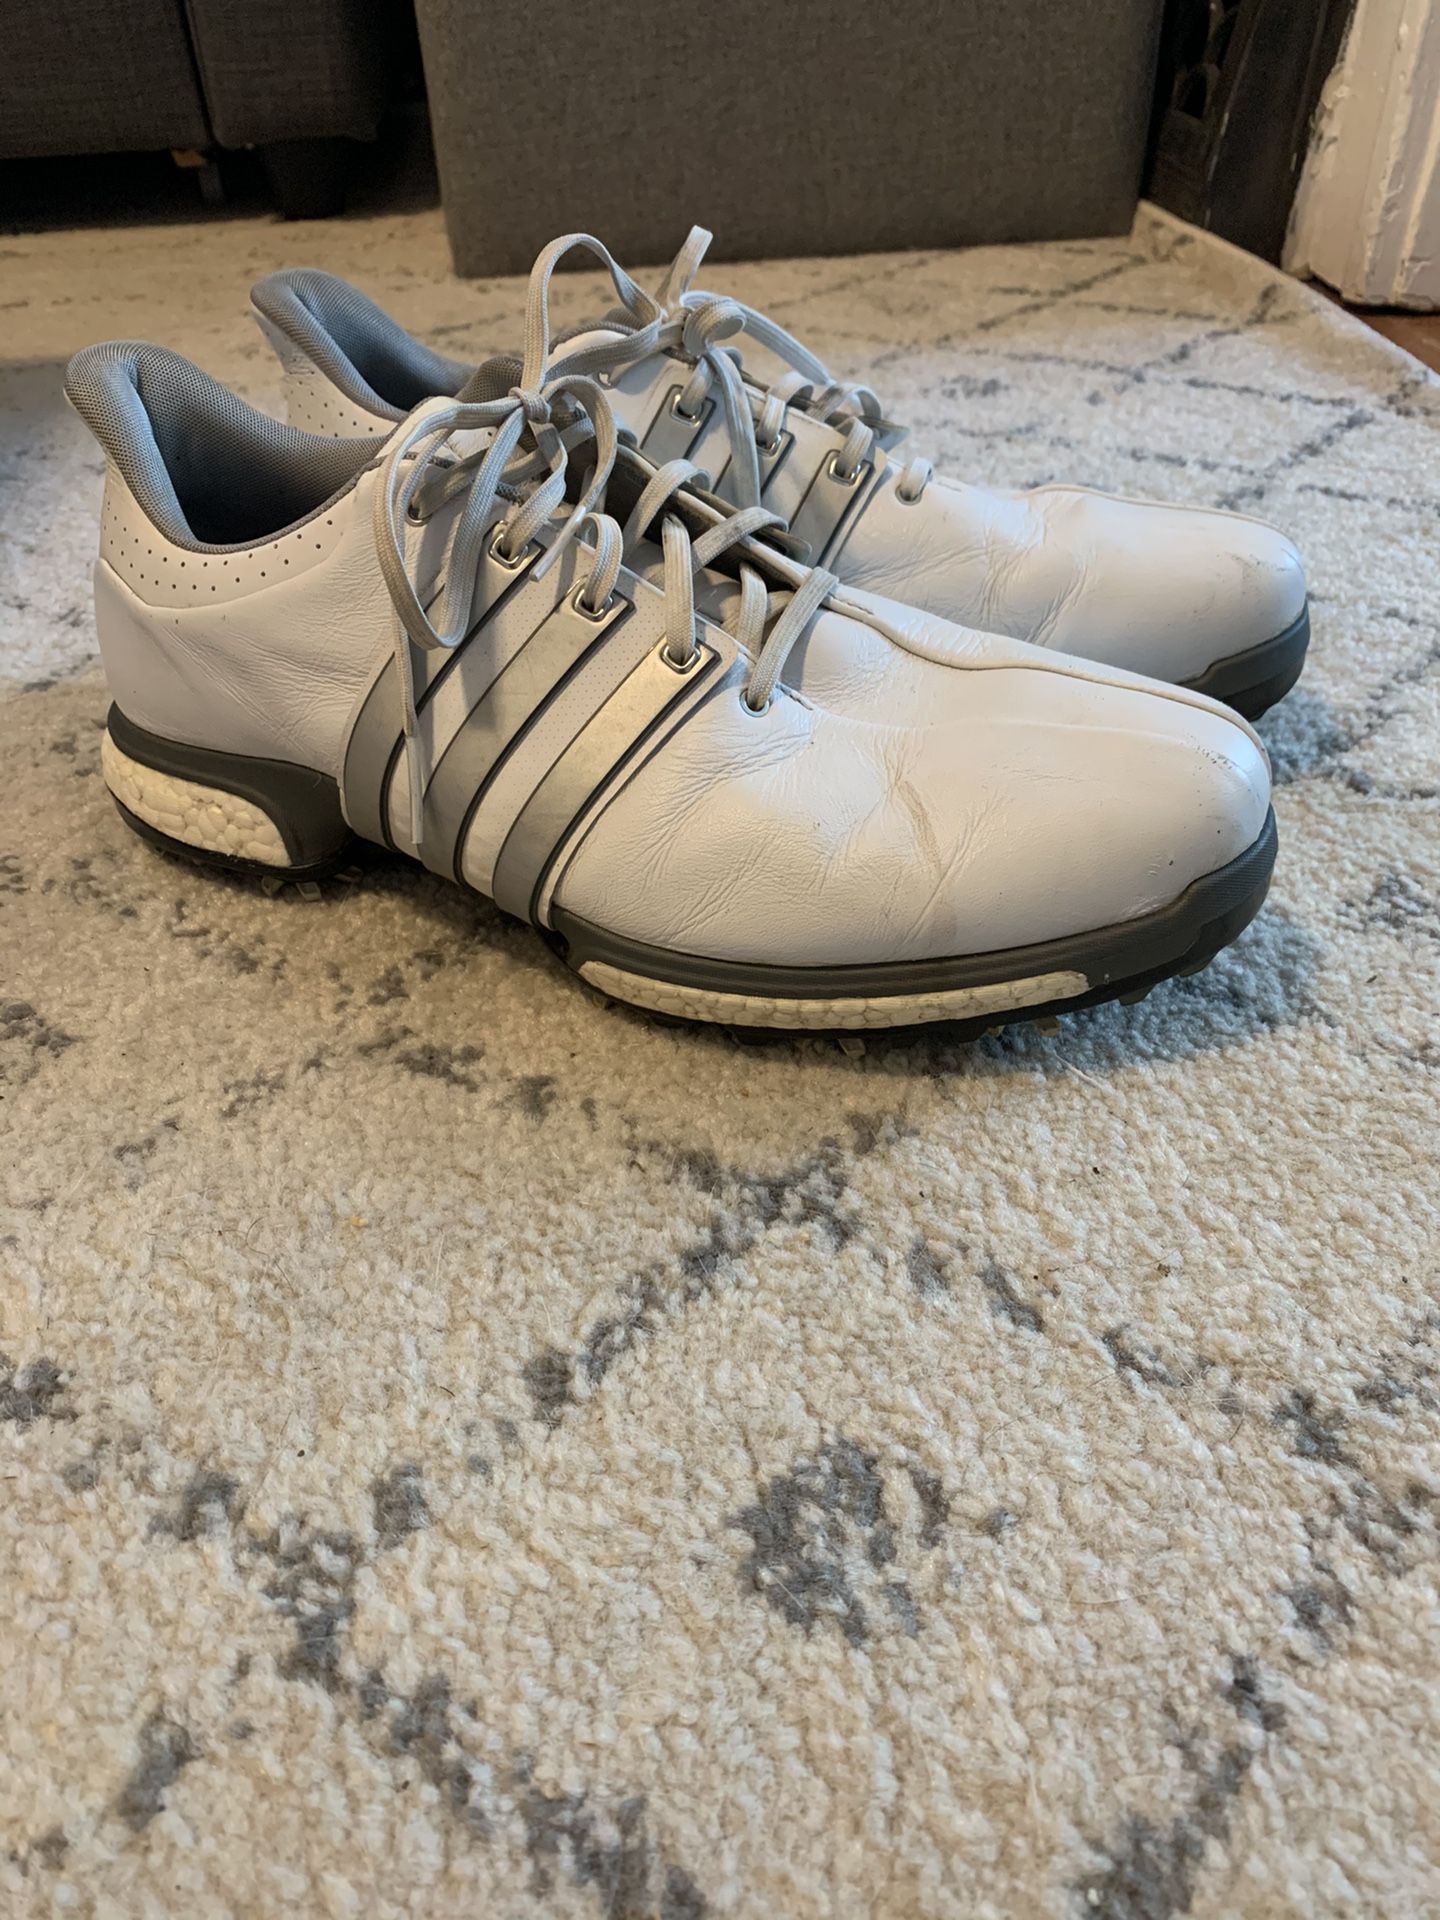 Adidas Boost Tour 360 Mens size 11.5 golf shoes